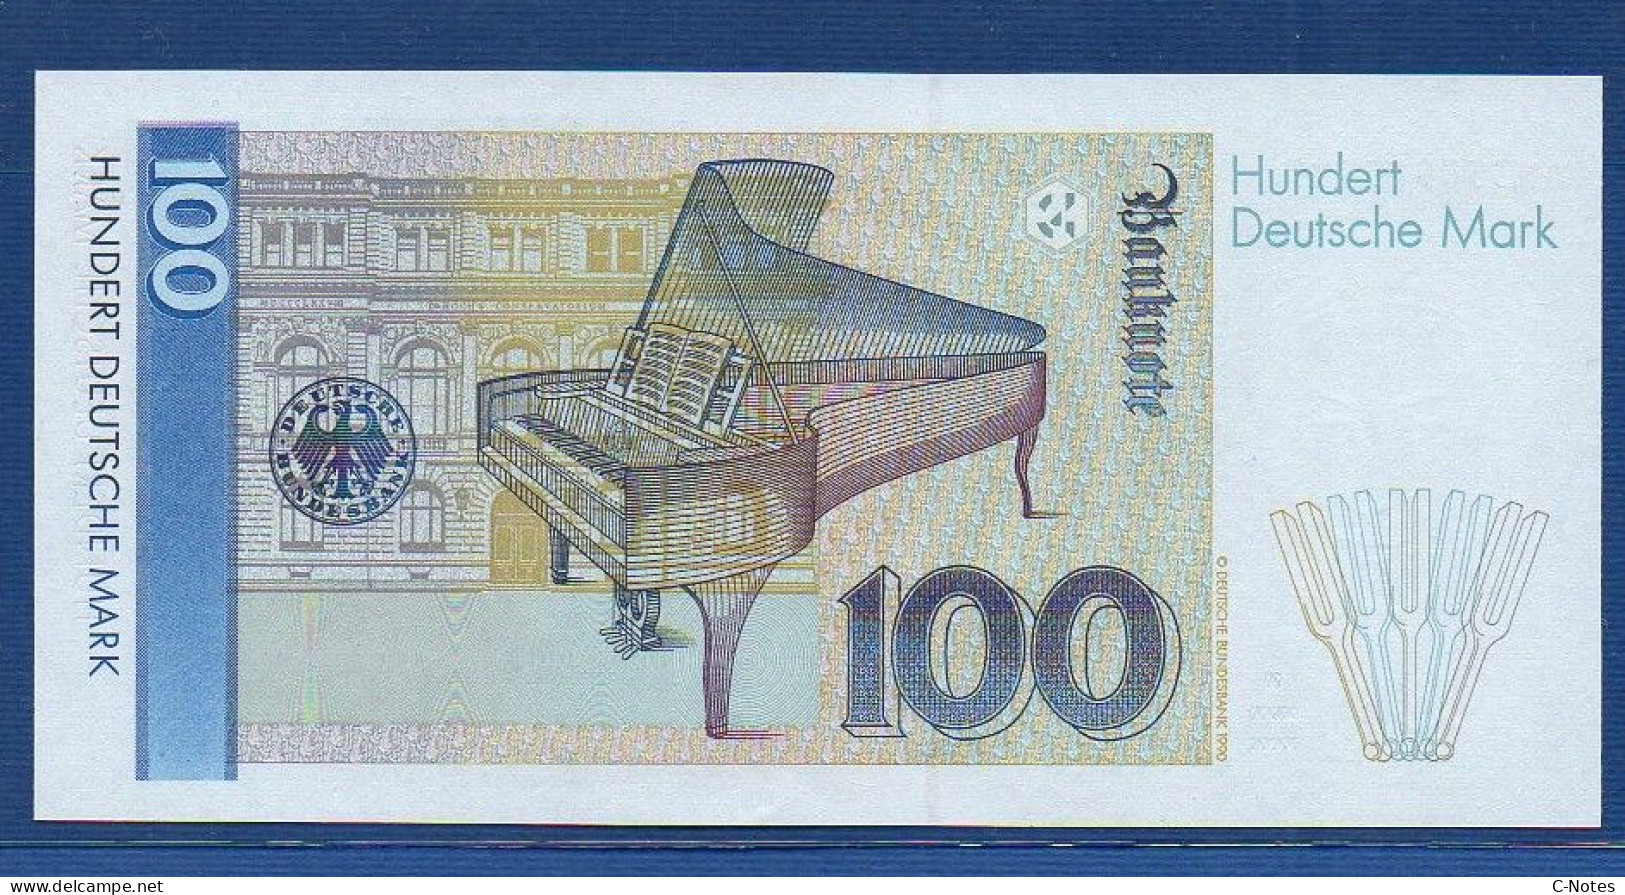 FEDERAL REPUBLIC OF GERMANY - P.41c – 100 Deutsche Mark 1993 UNC, S/n DN3509254Y9 - 100 Deutsche Mark